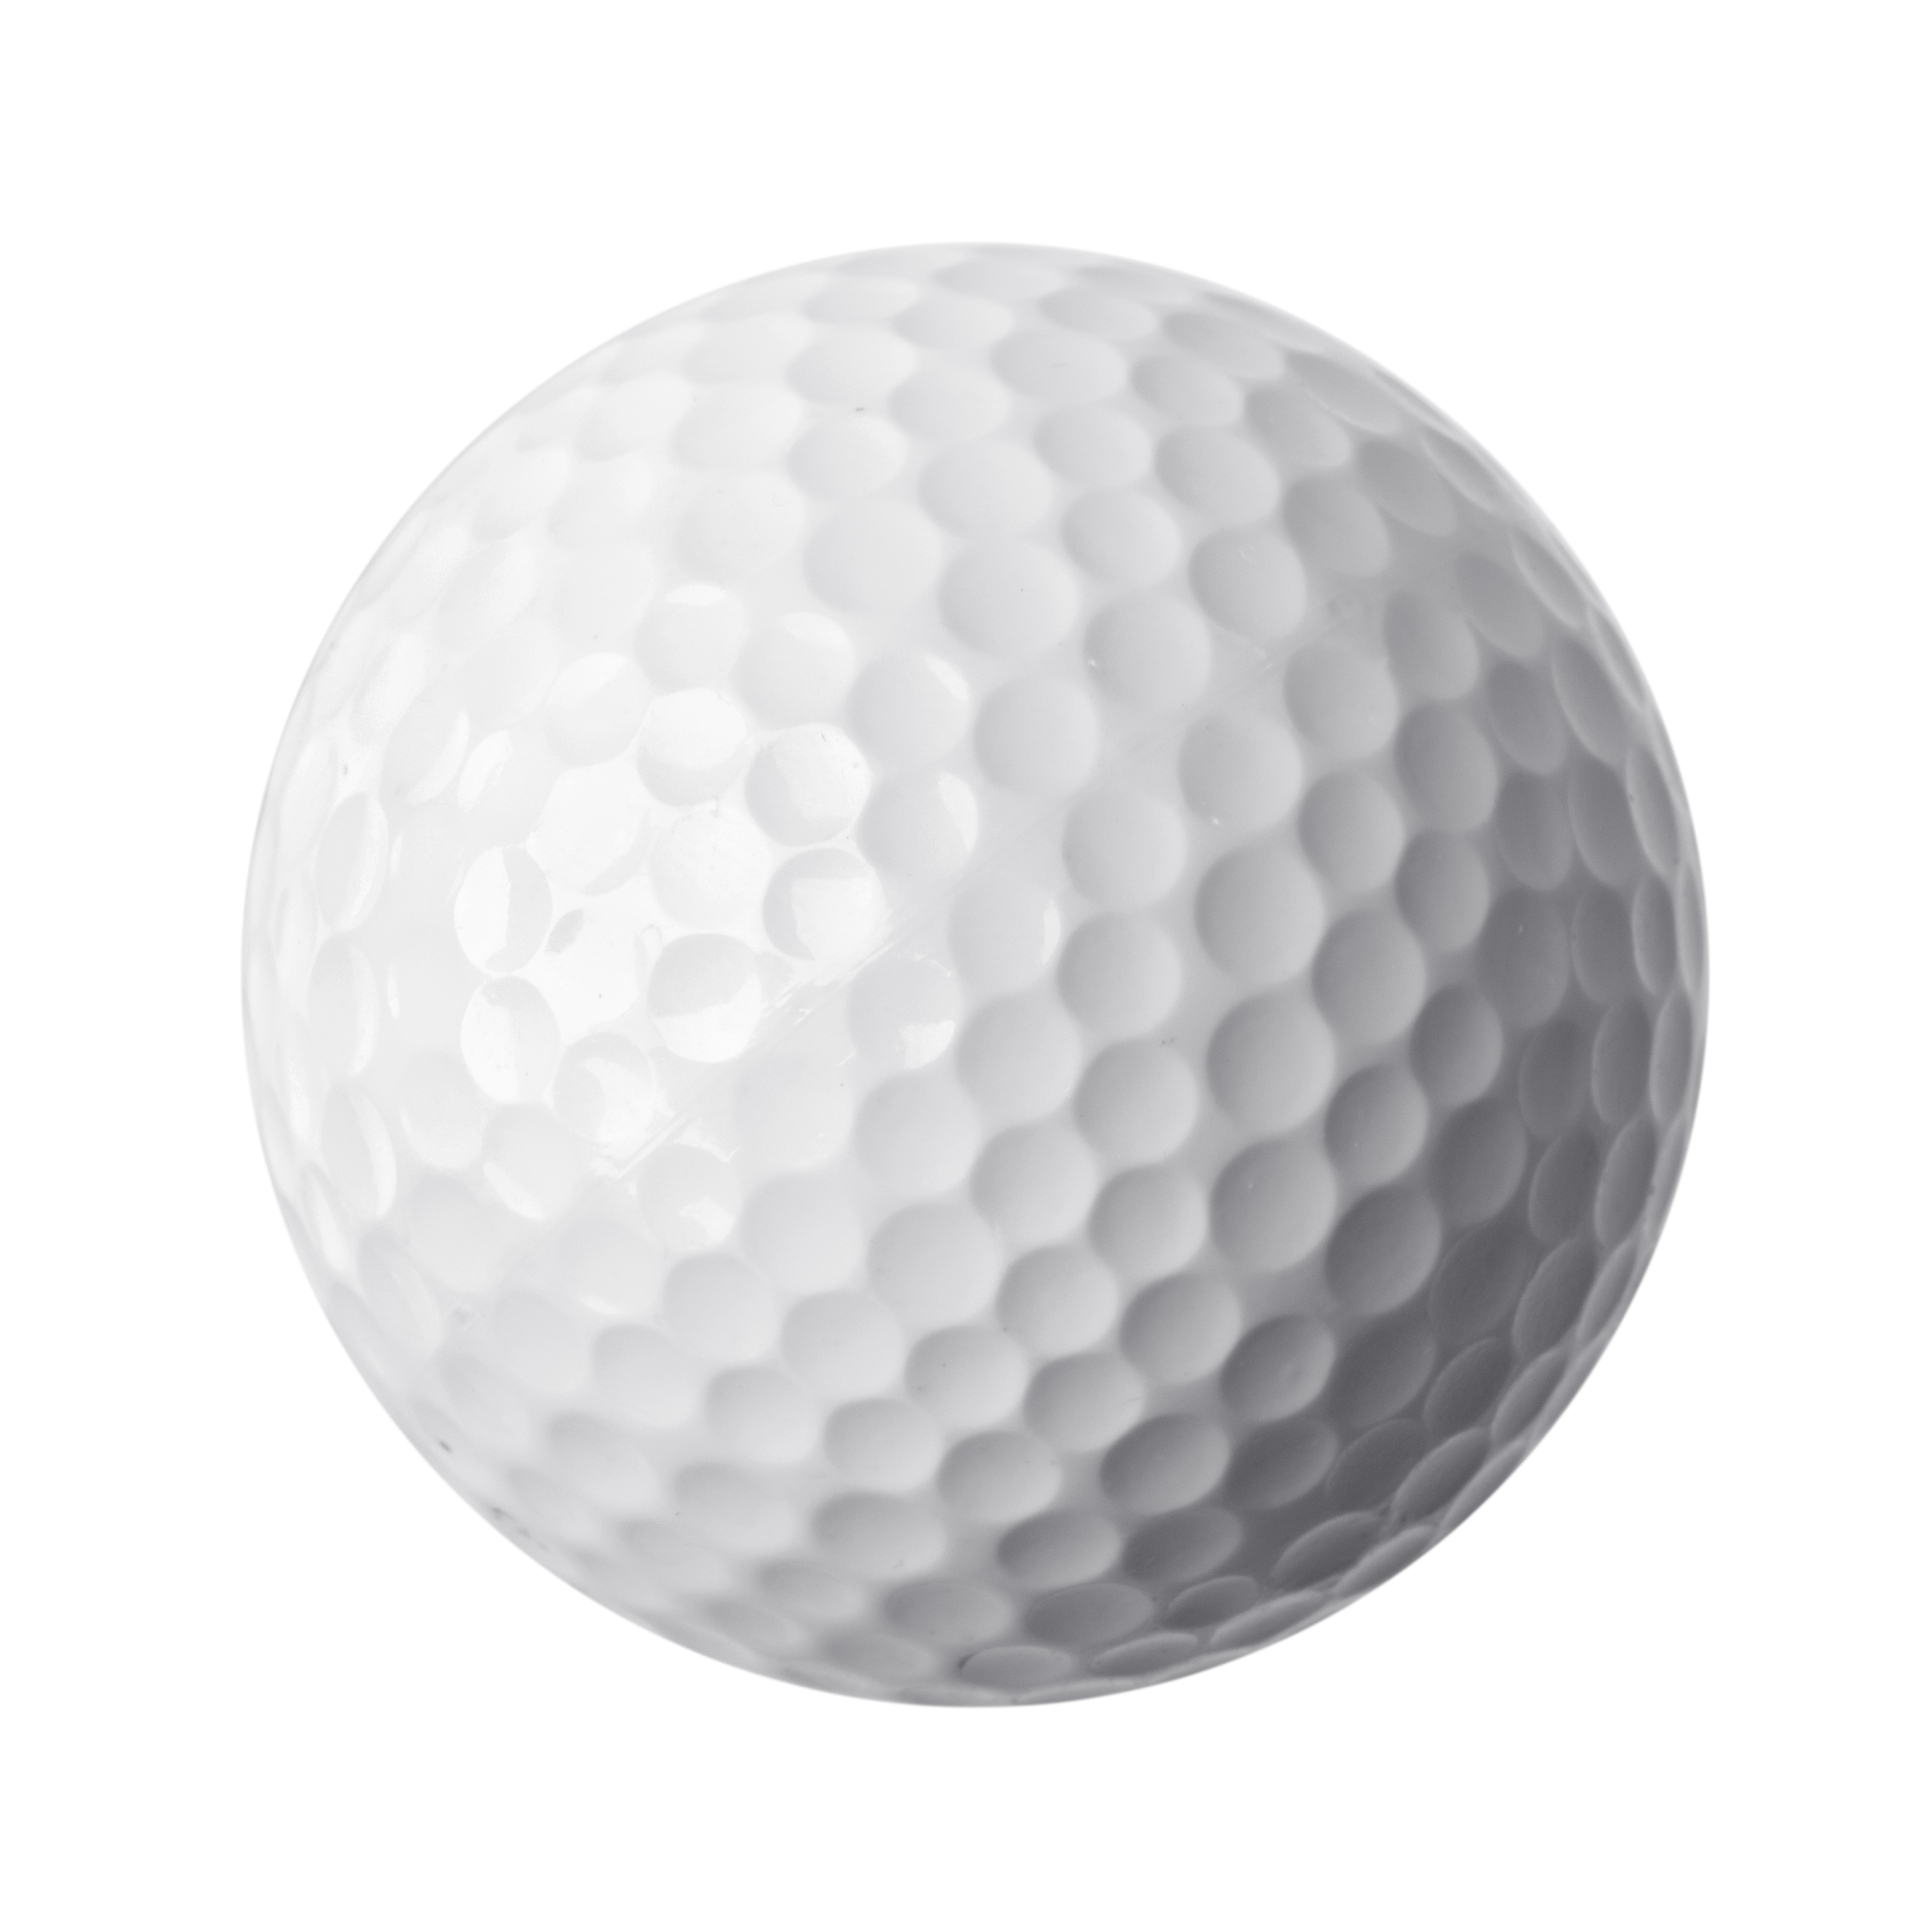 golf-ball-2021-09-02-14-43-58-utc.jpg